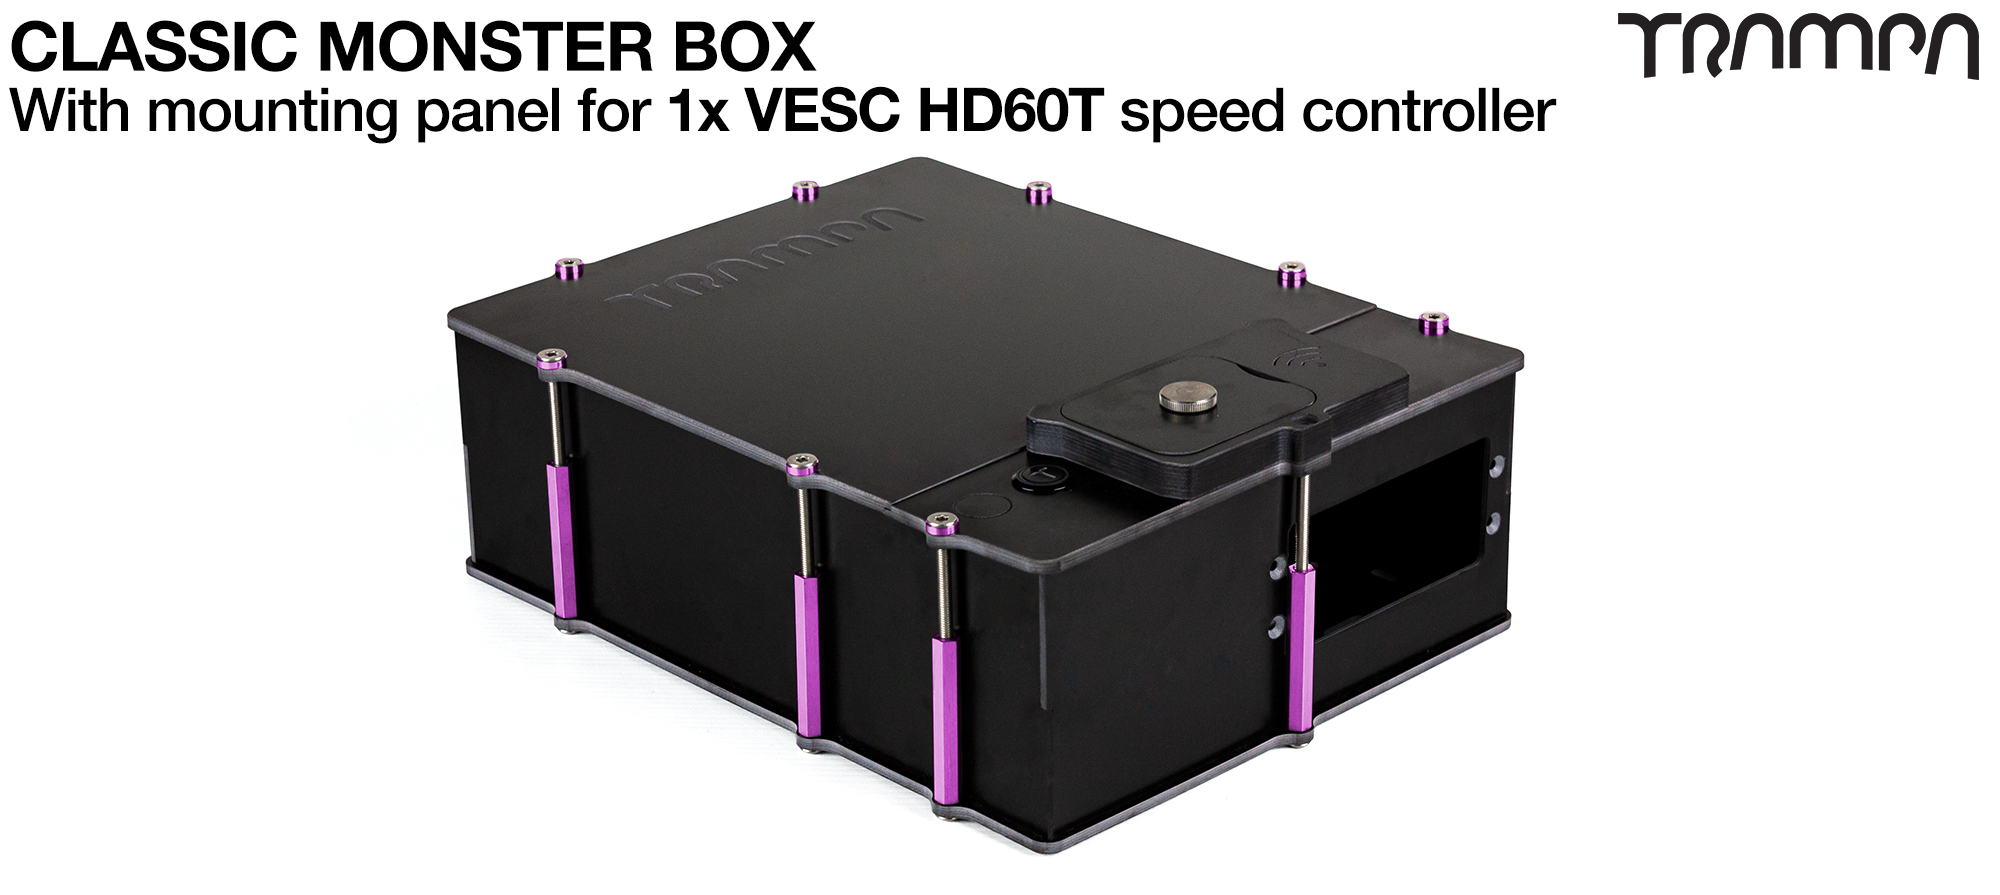 Classic MONSTER Box fits 84x 18650 cells or 2x22000 mAh Lipos & has Panels to fit 1x VESC HD-60T internally. 